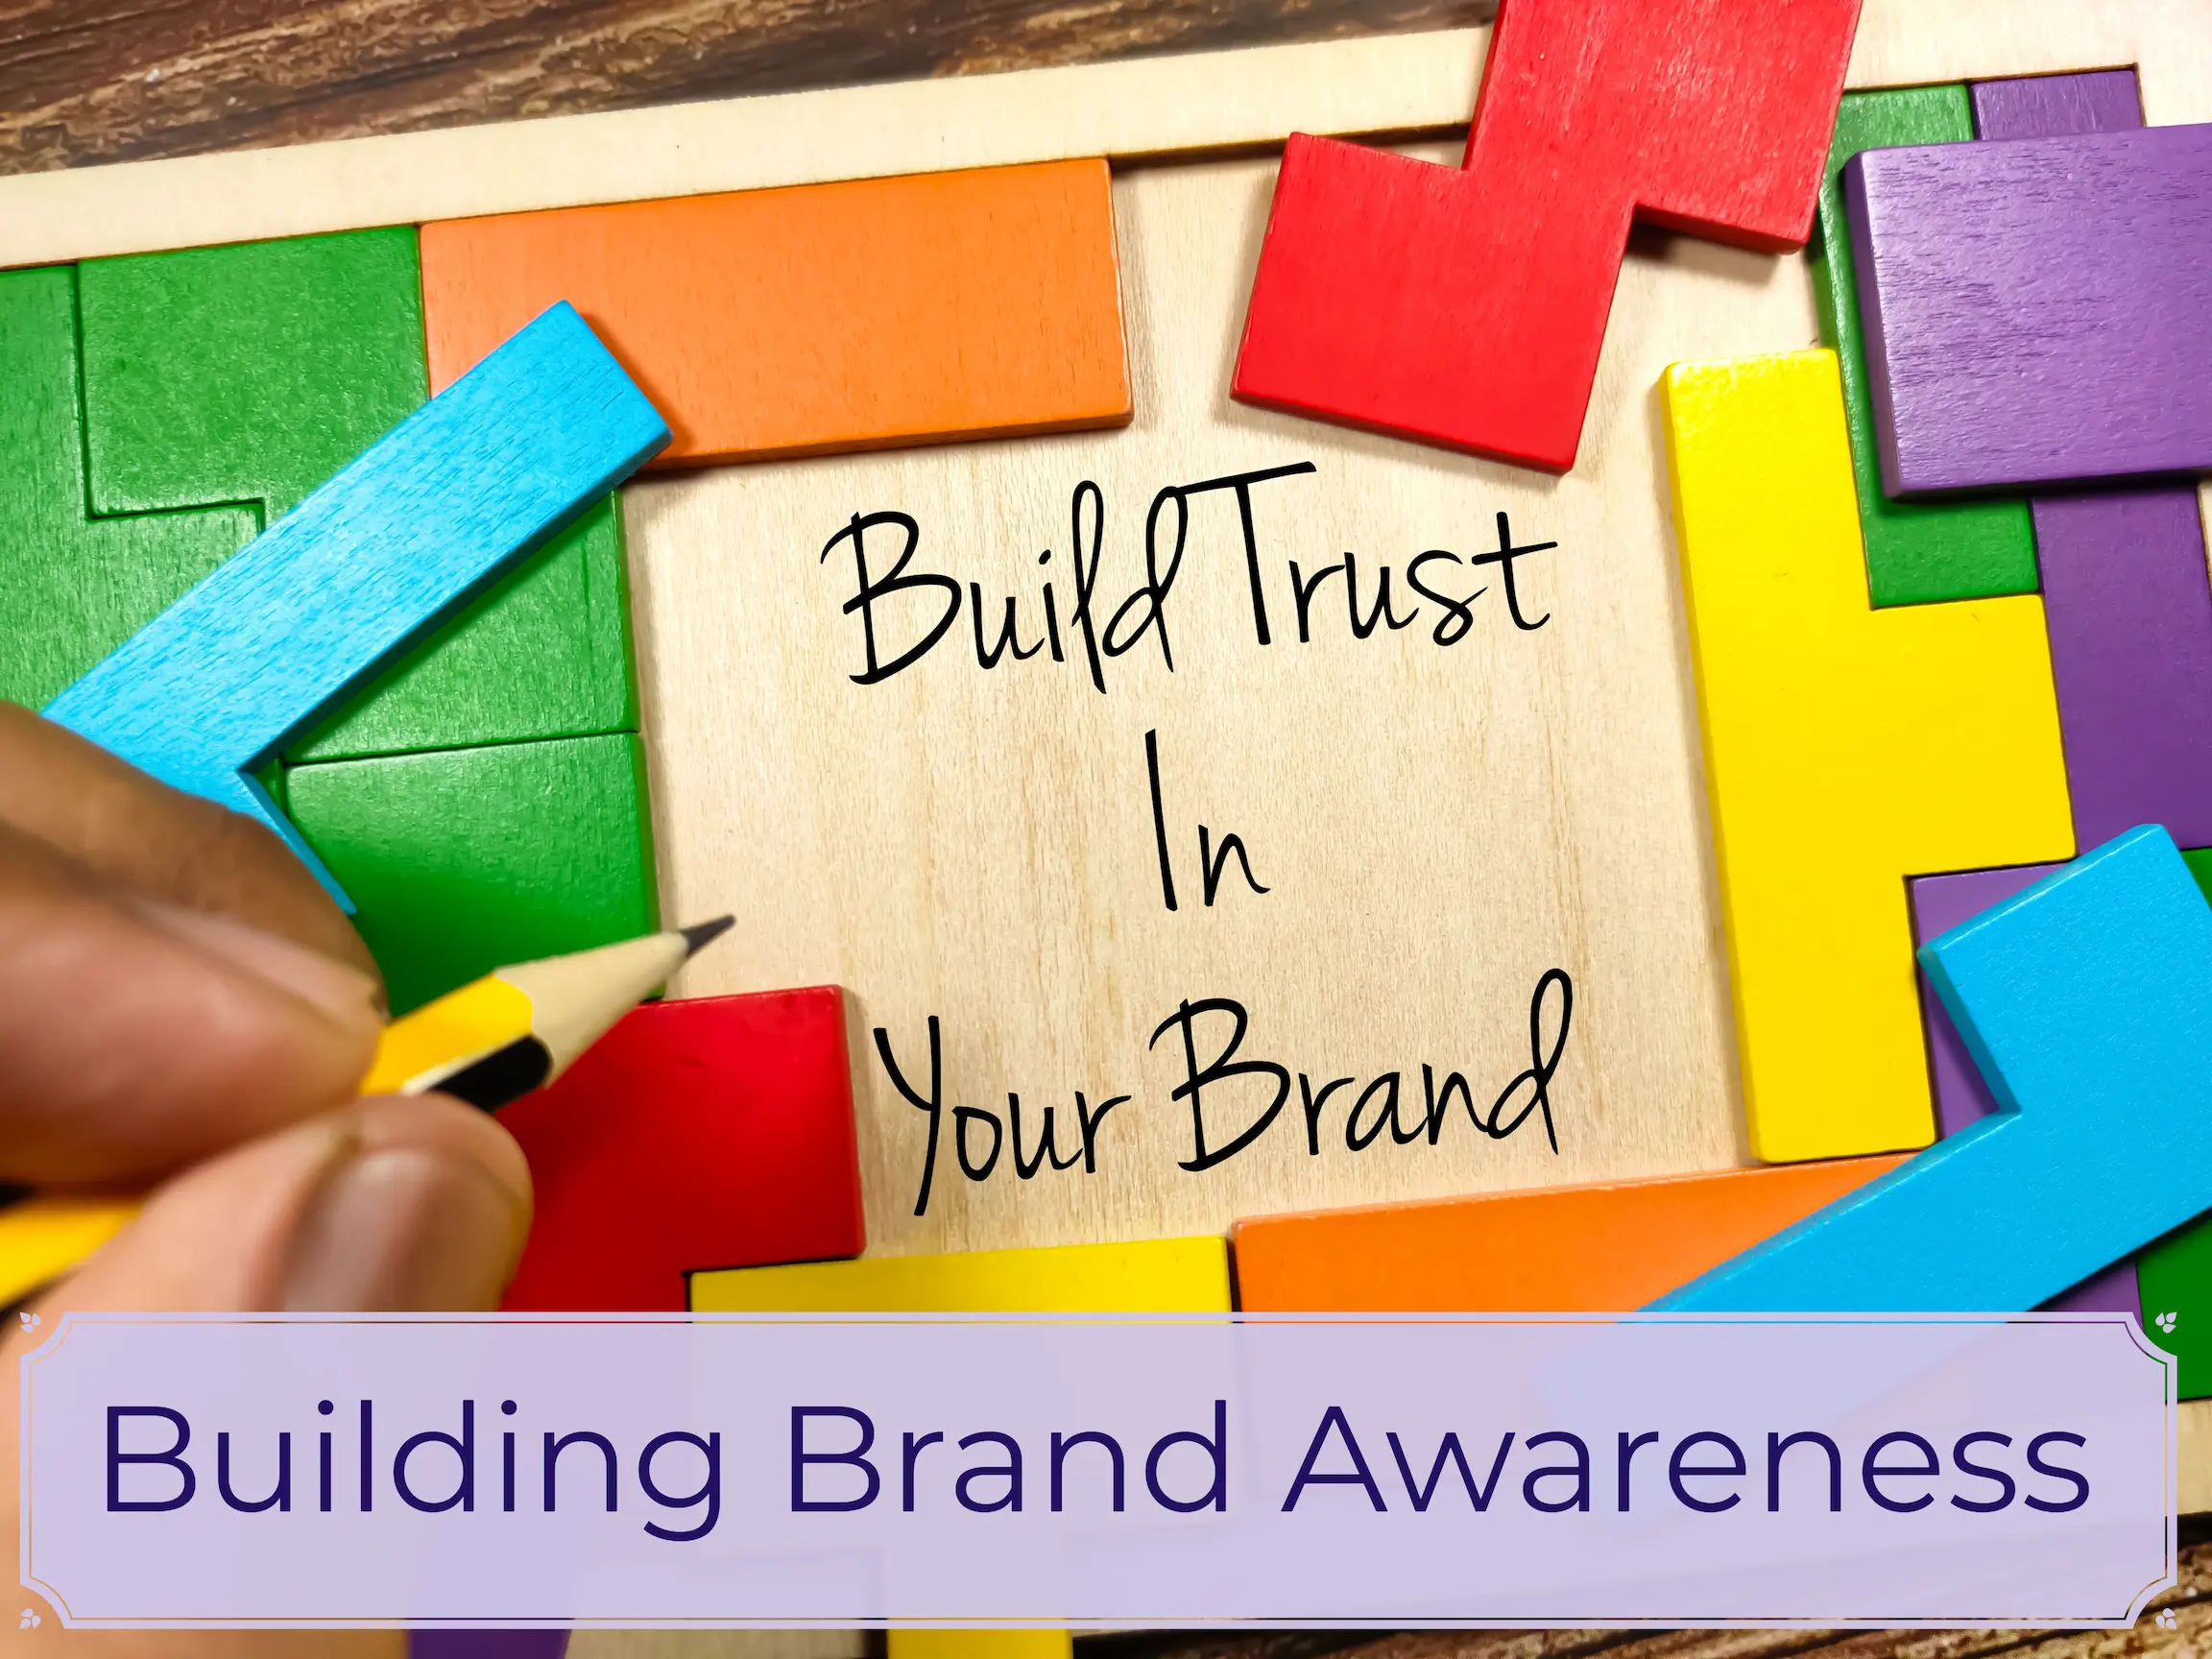 BVM can help you build brand awareness